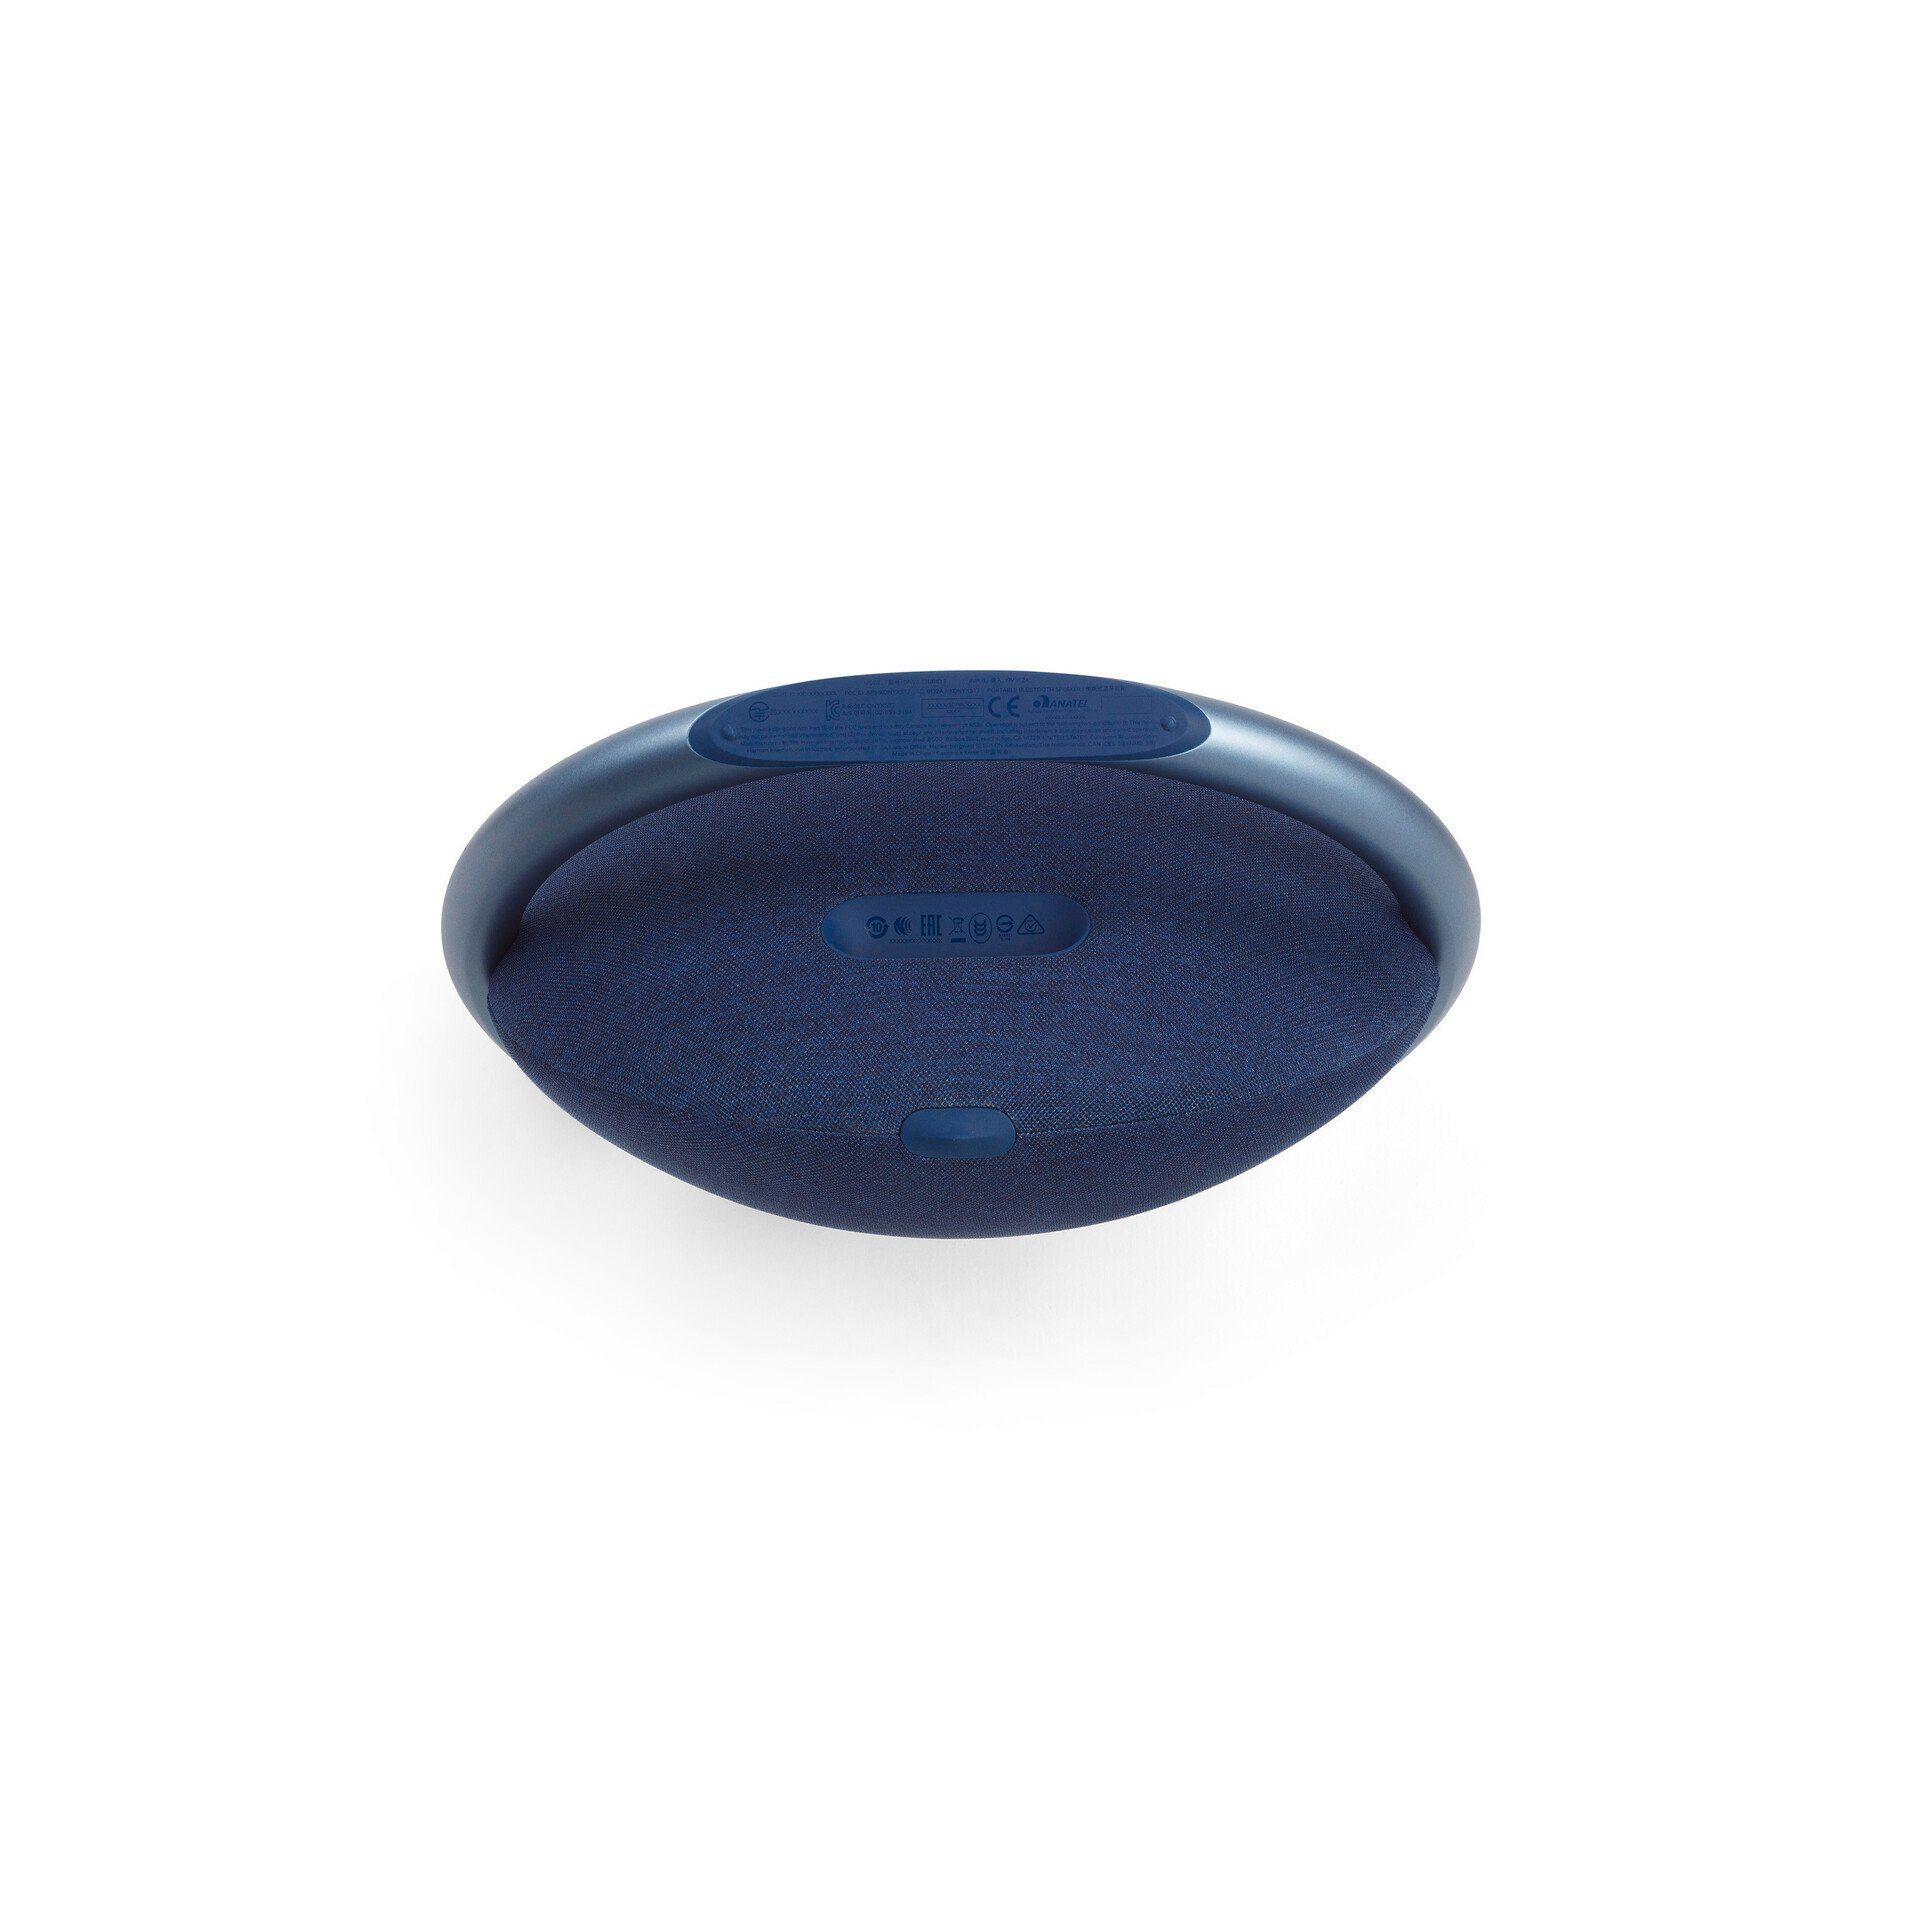 Harman/Kardon ONYX STUDIO 7 Lautsprecher 50 Bluetooth, Bluetooth, blau (A2DP W) AVRCP